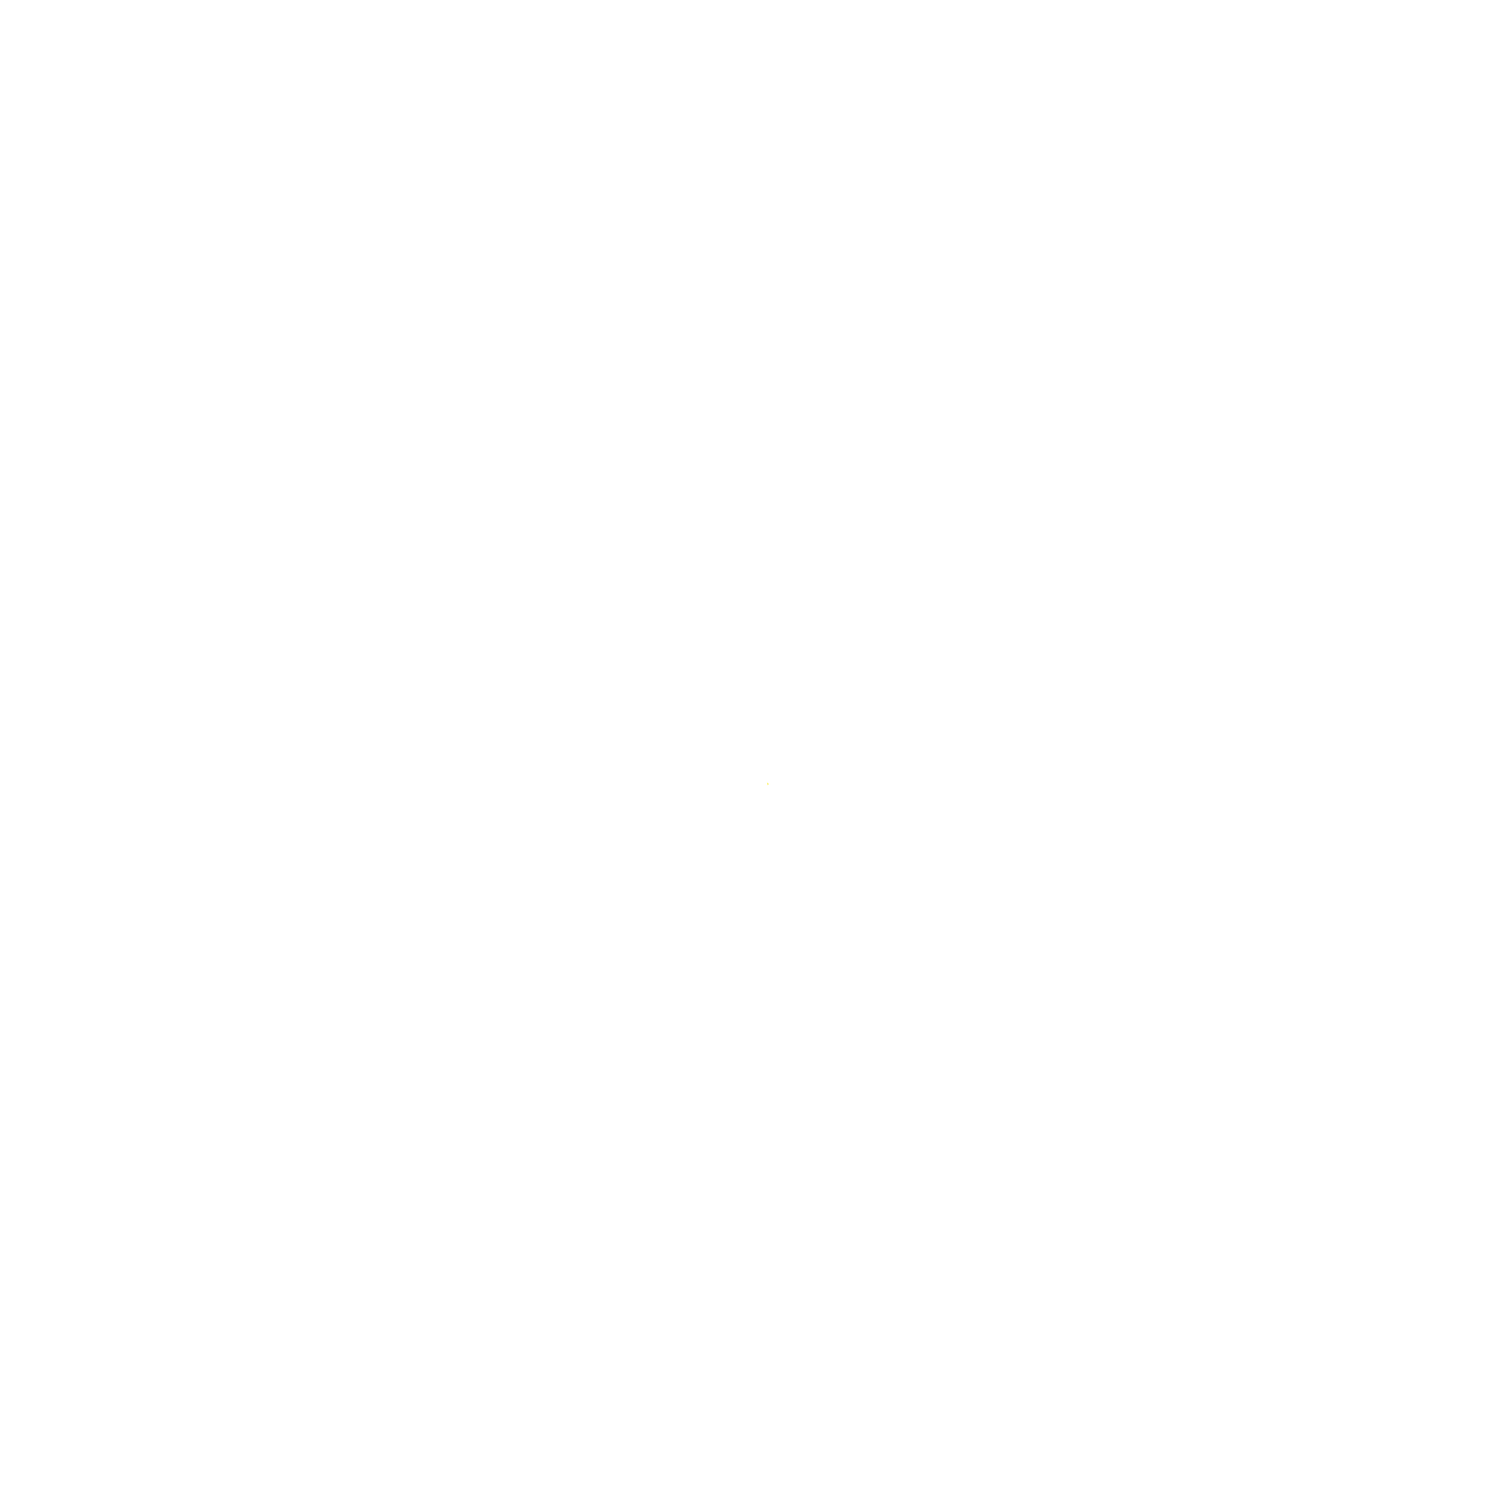 World Conquerors church